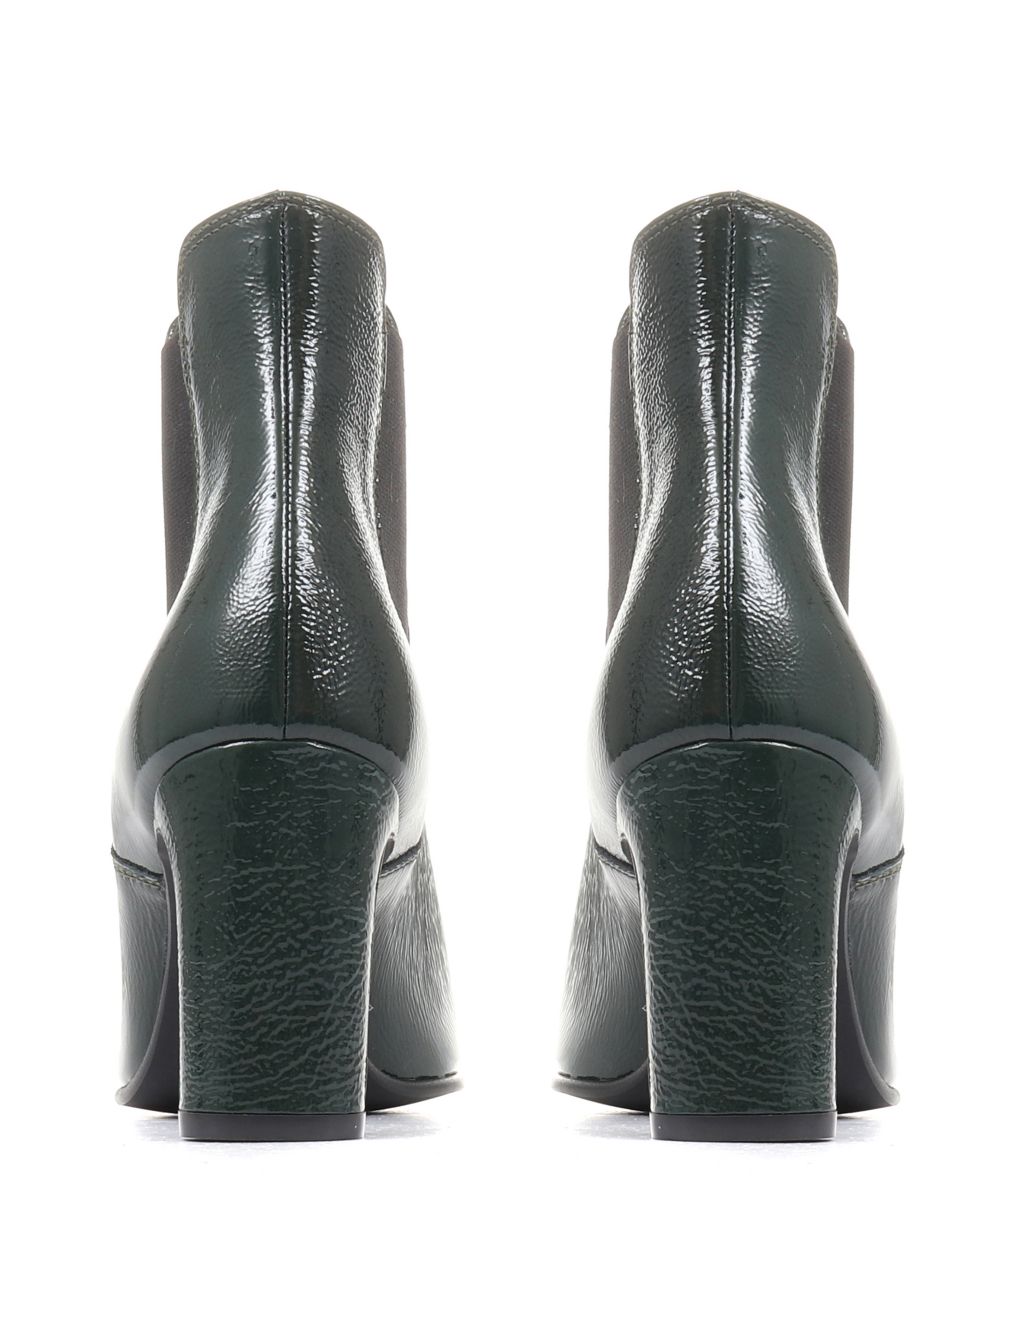 Leather Patent Chelsea Block Heel Boots image 3